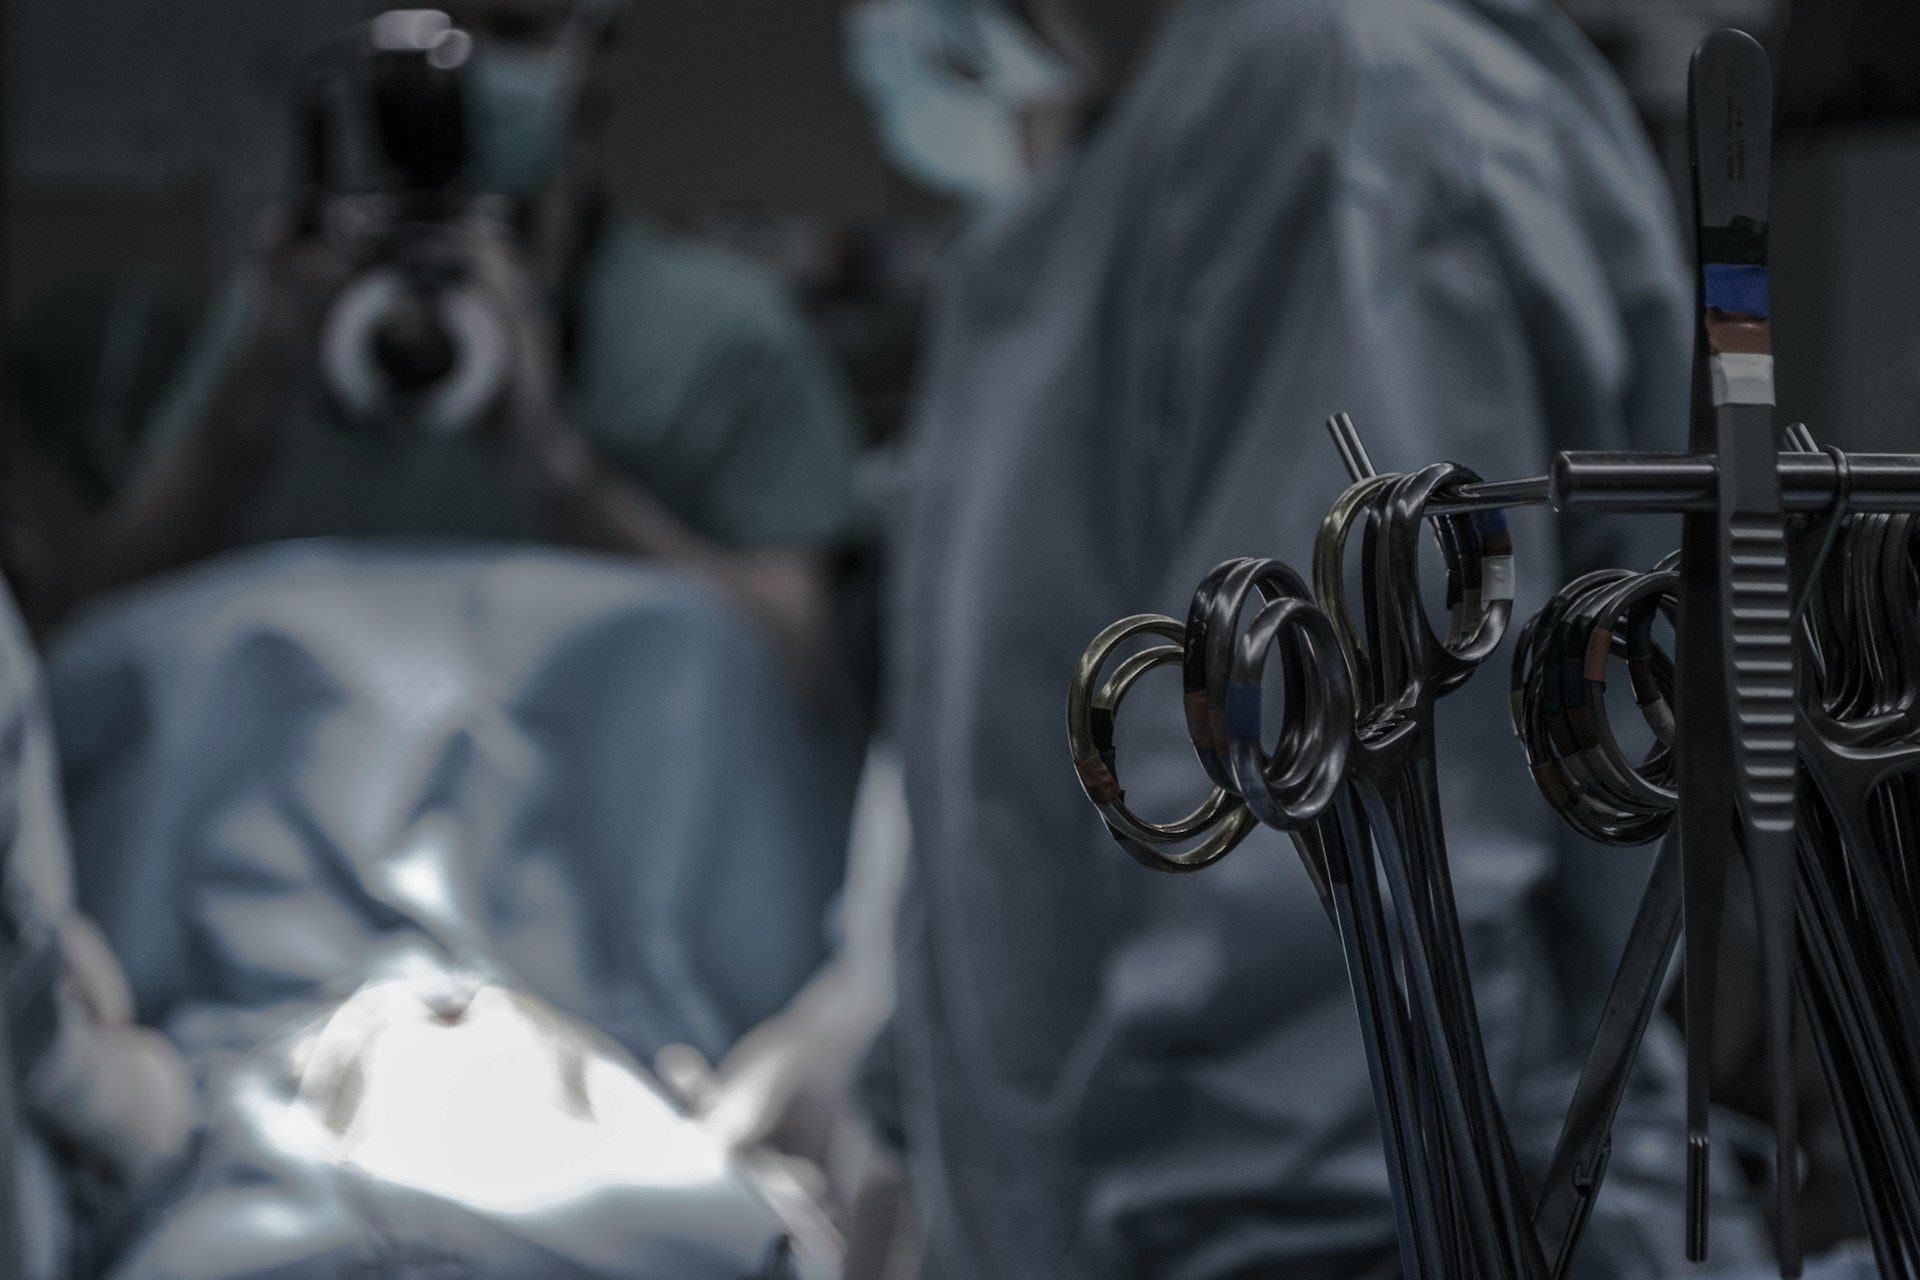 US surgeons perform first pig-to-human kidney transplant